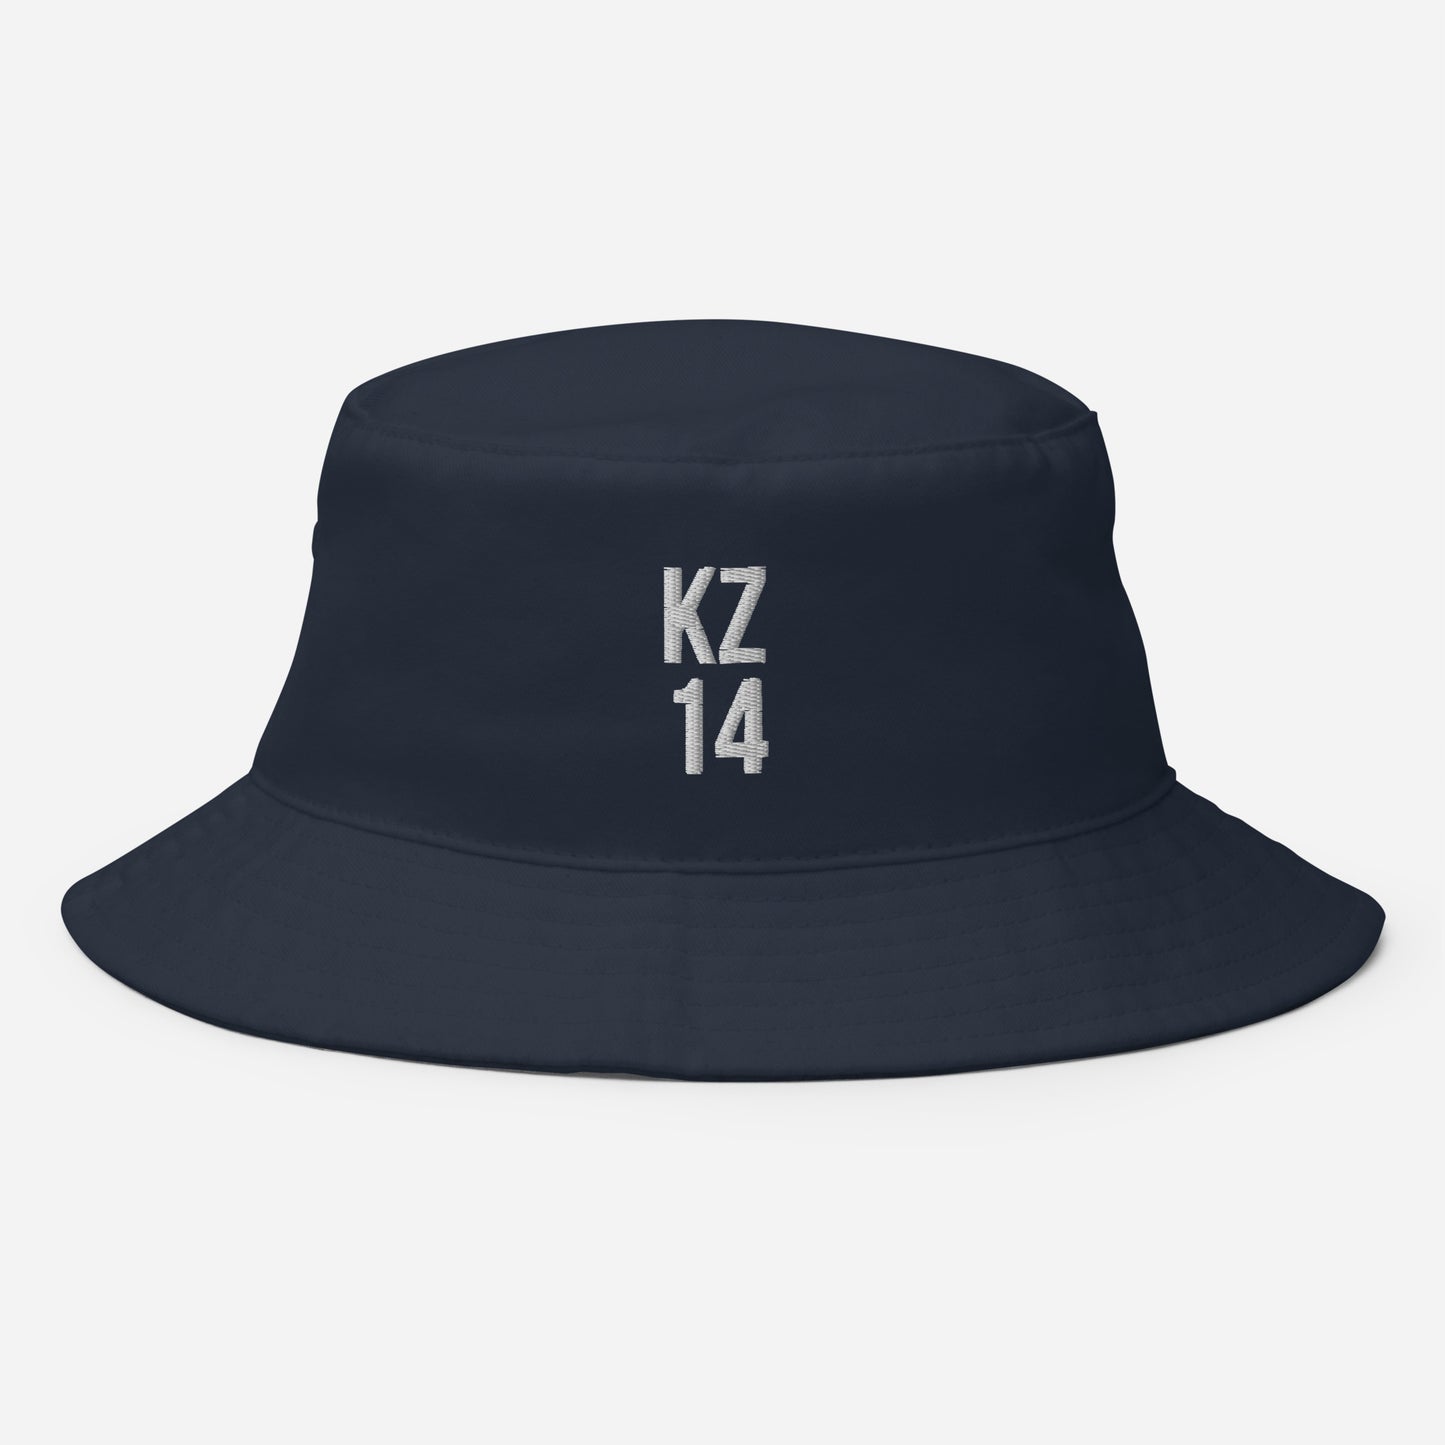 KZ 14 Bucket Hat